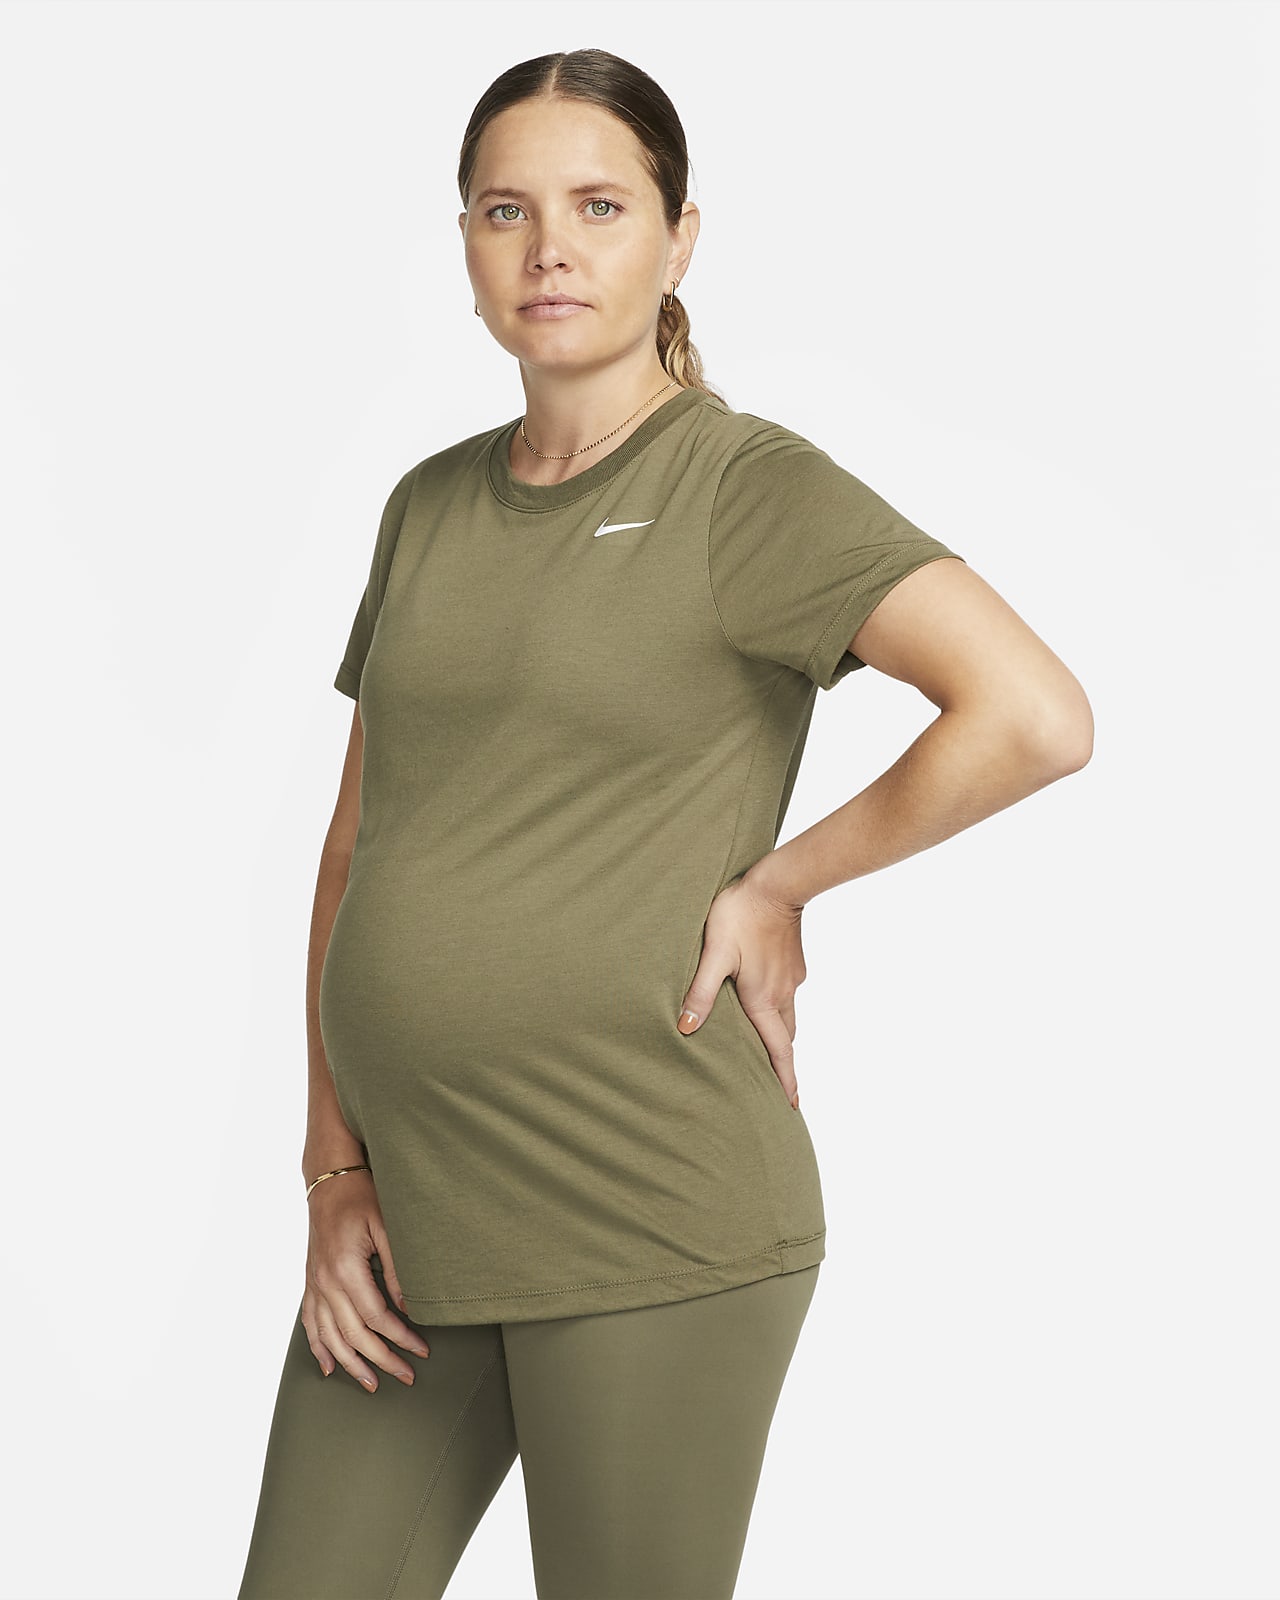 Nike Dri-FIT (M) Women's T-Shirt (Maternity)